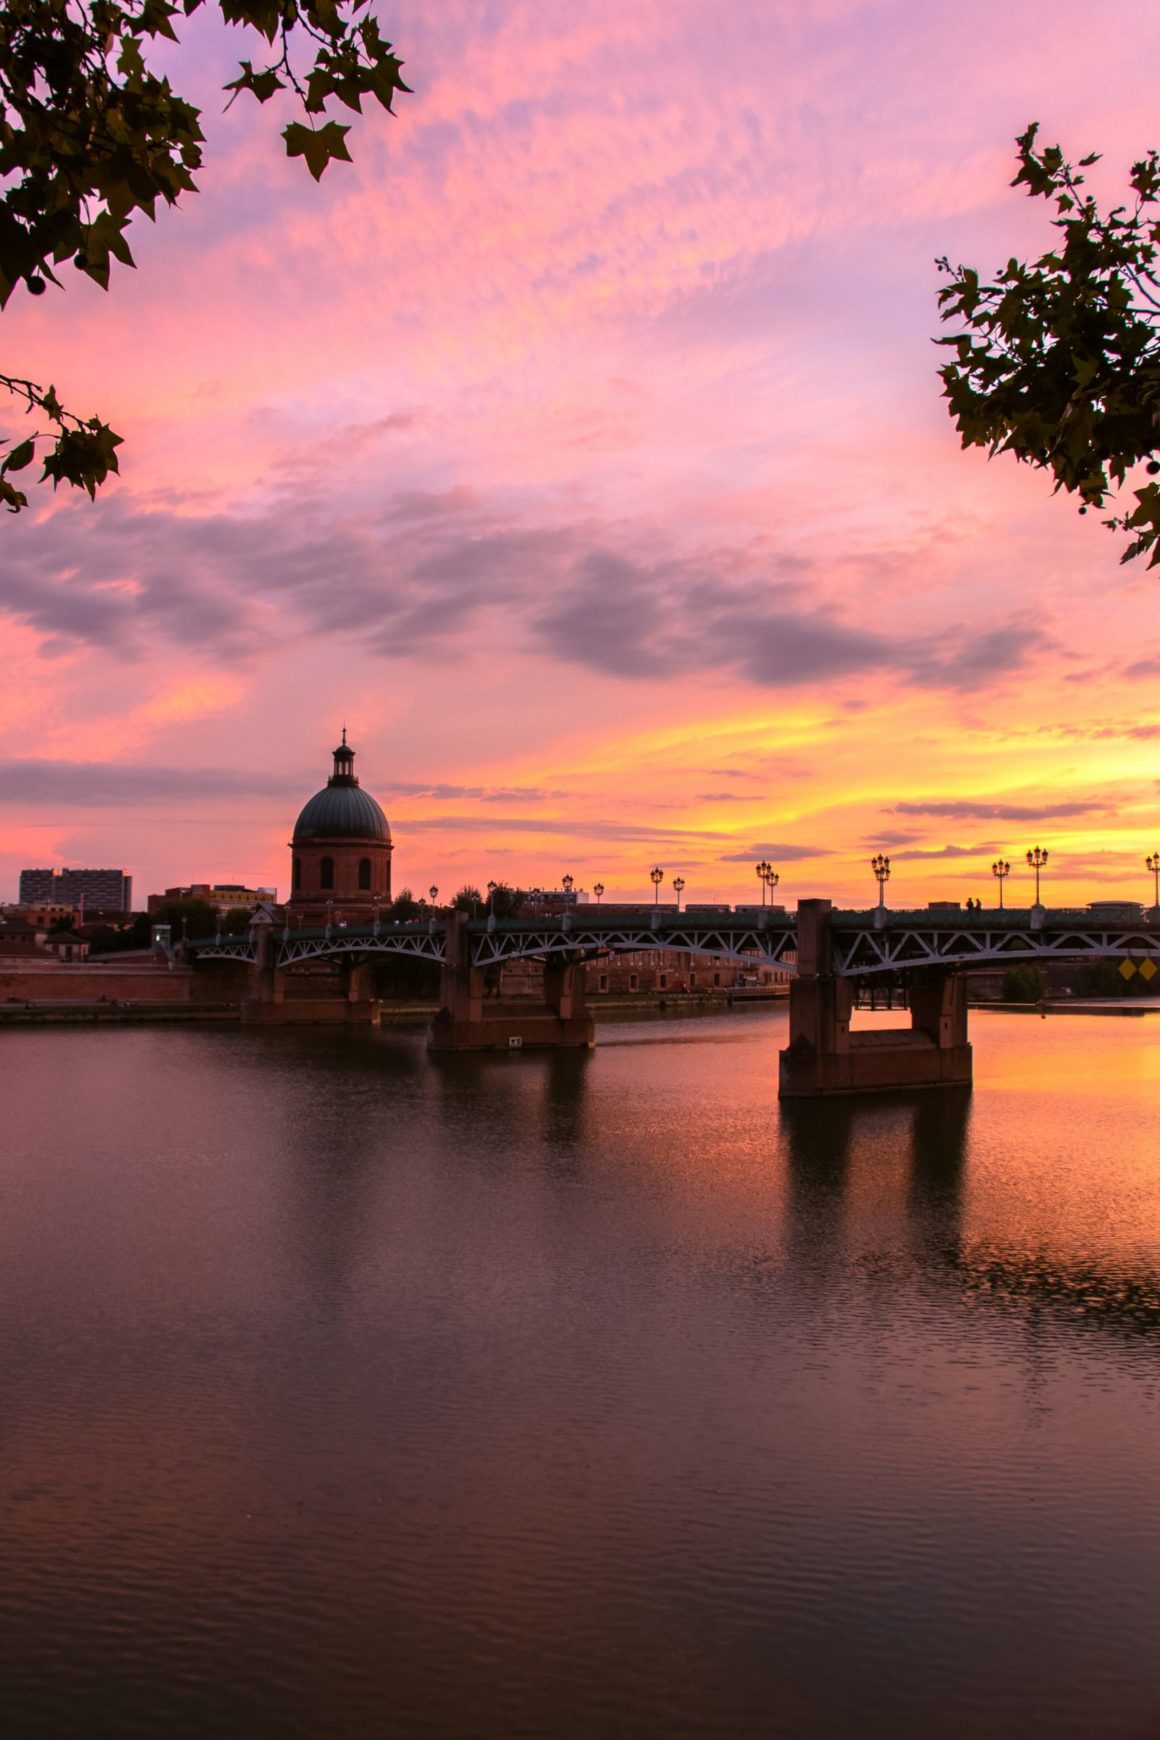 Bridge, Toulouse birdge, canal du midi